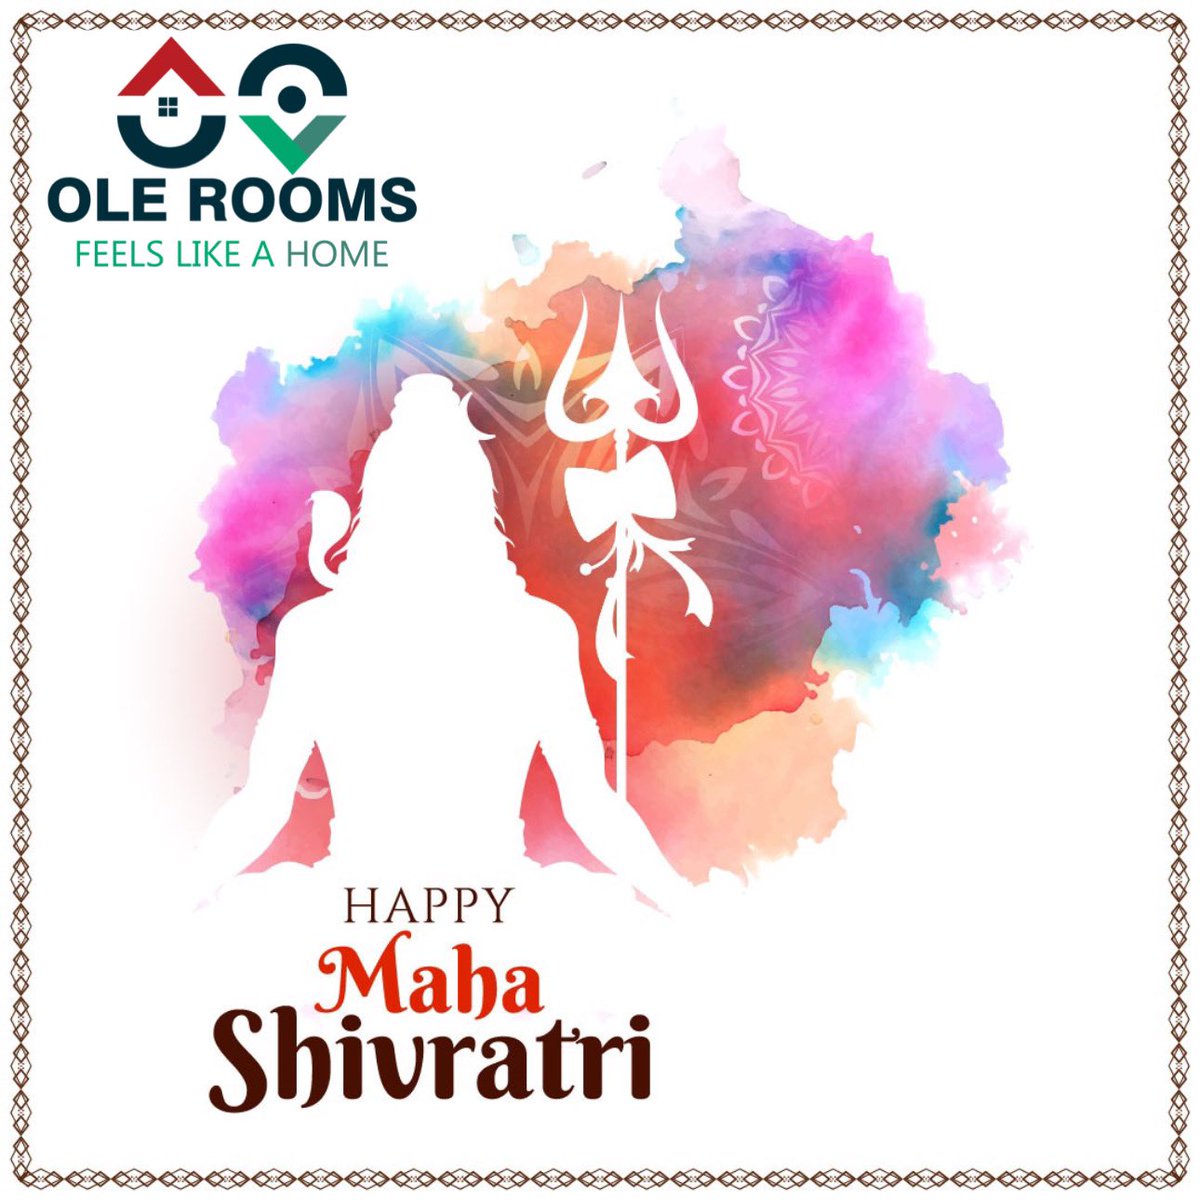 May the divine blessings of Lord Shiva infuse every swing and slide with joy this Maha Shivratri!
Happy Maha Shivratri!
.
#harharmahadev #mahadev #playgroundequipment #mahashivratri #shiva #shivay #namonamo #mahadev #mahakal #rudrabhishek #shankar #sanskrtam #shivparvati